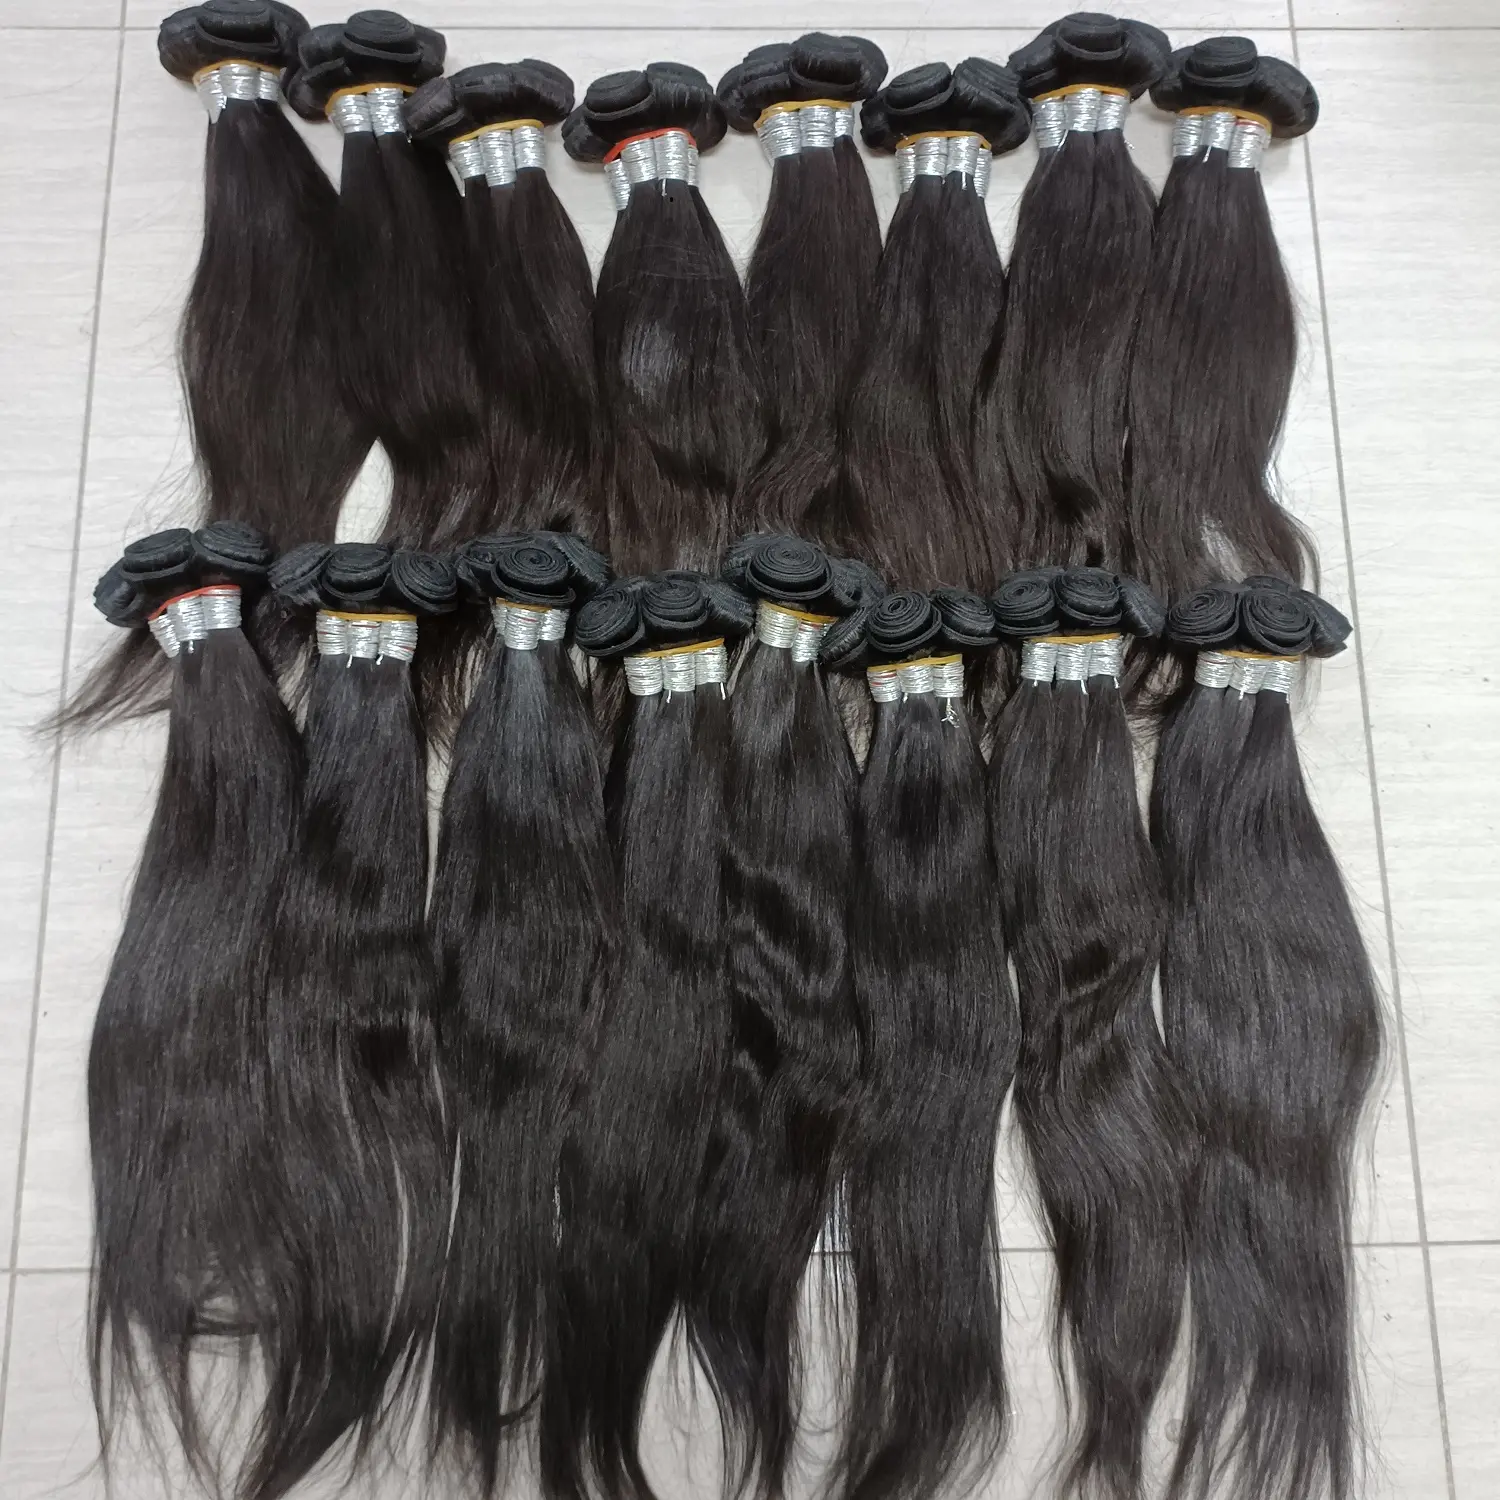 लेट्सफ्लाई फास्ट शिपिंग लंबे इंच थोक सस्ते 7ए सीधे बाल बंडल काली महिलाओं के लिए ब्राजीलियाई रेमी मानव बाल एक्सटेंशन